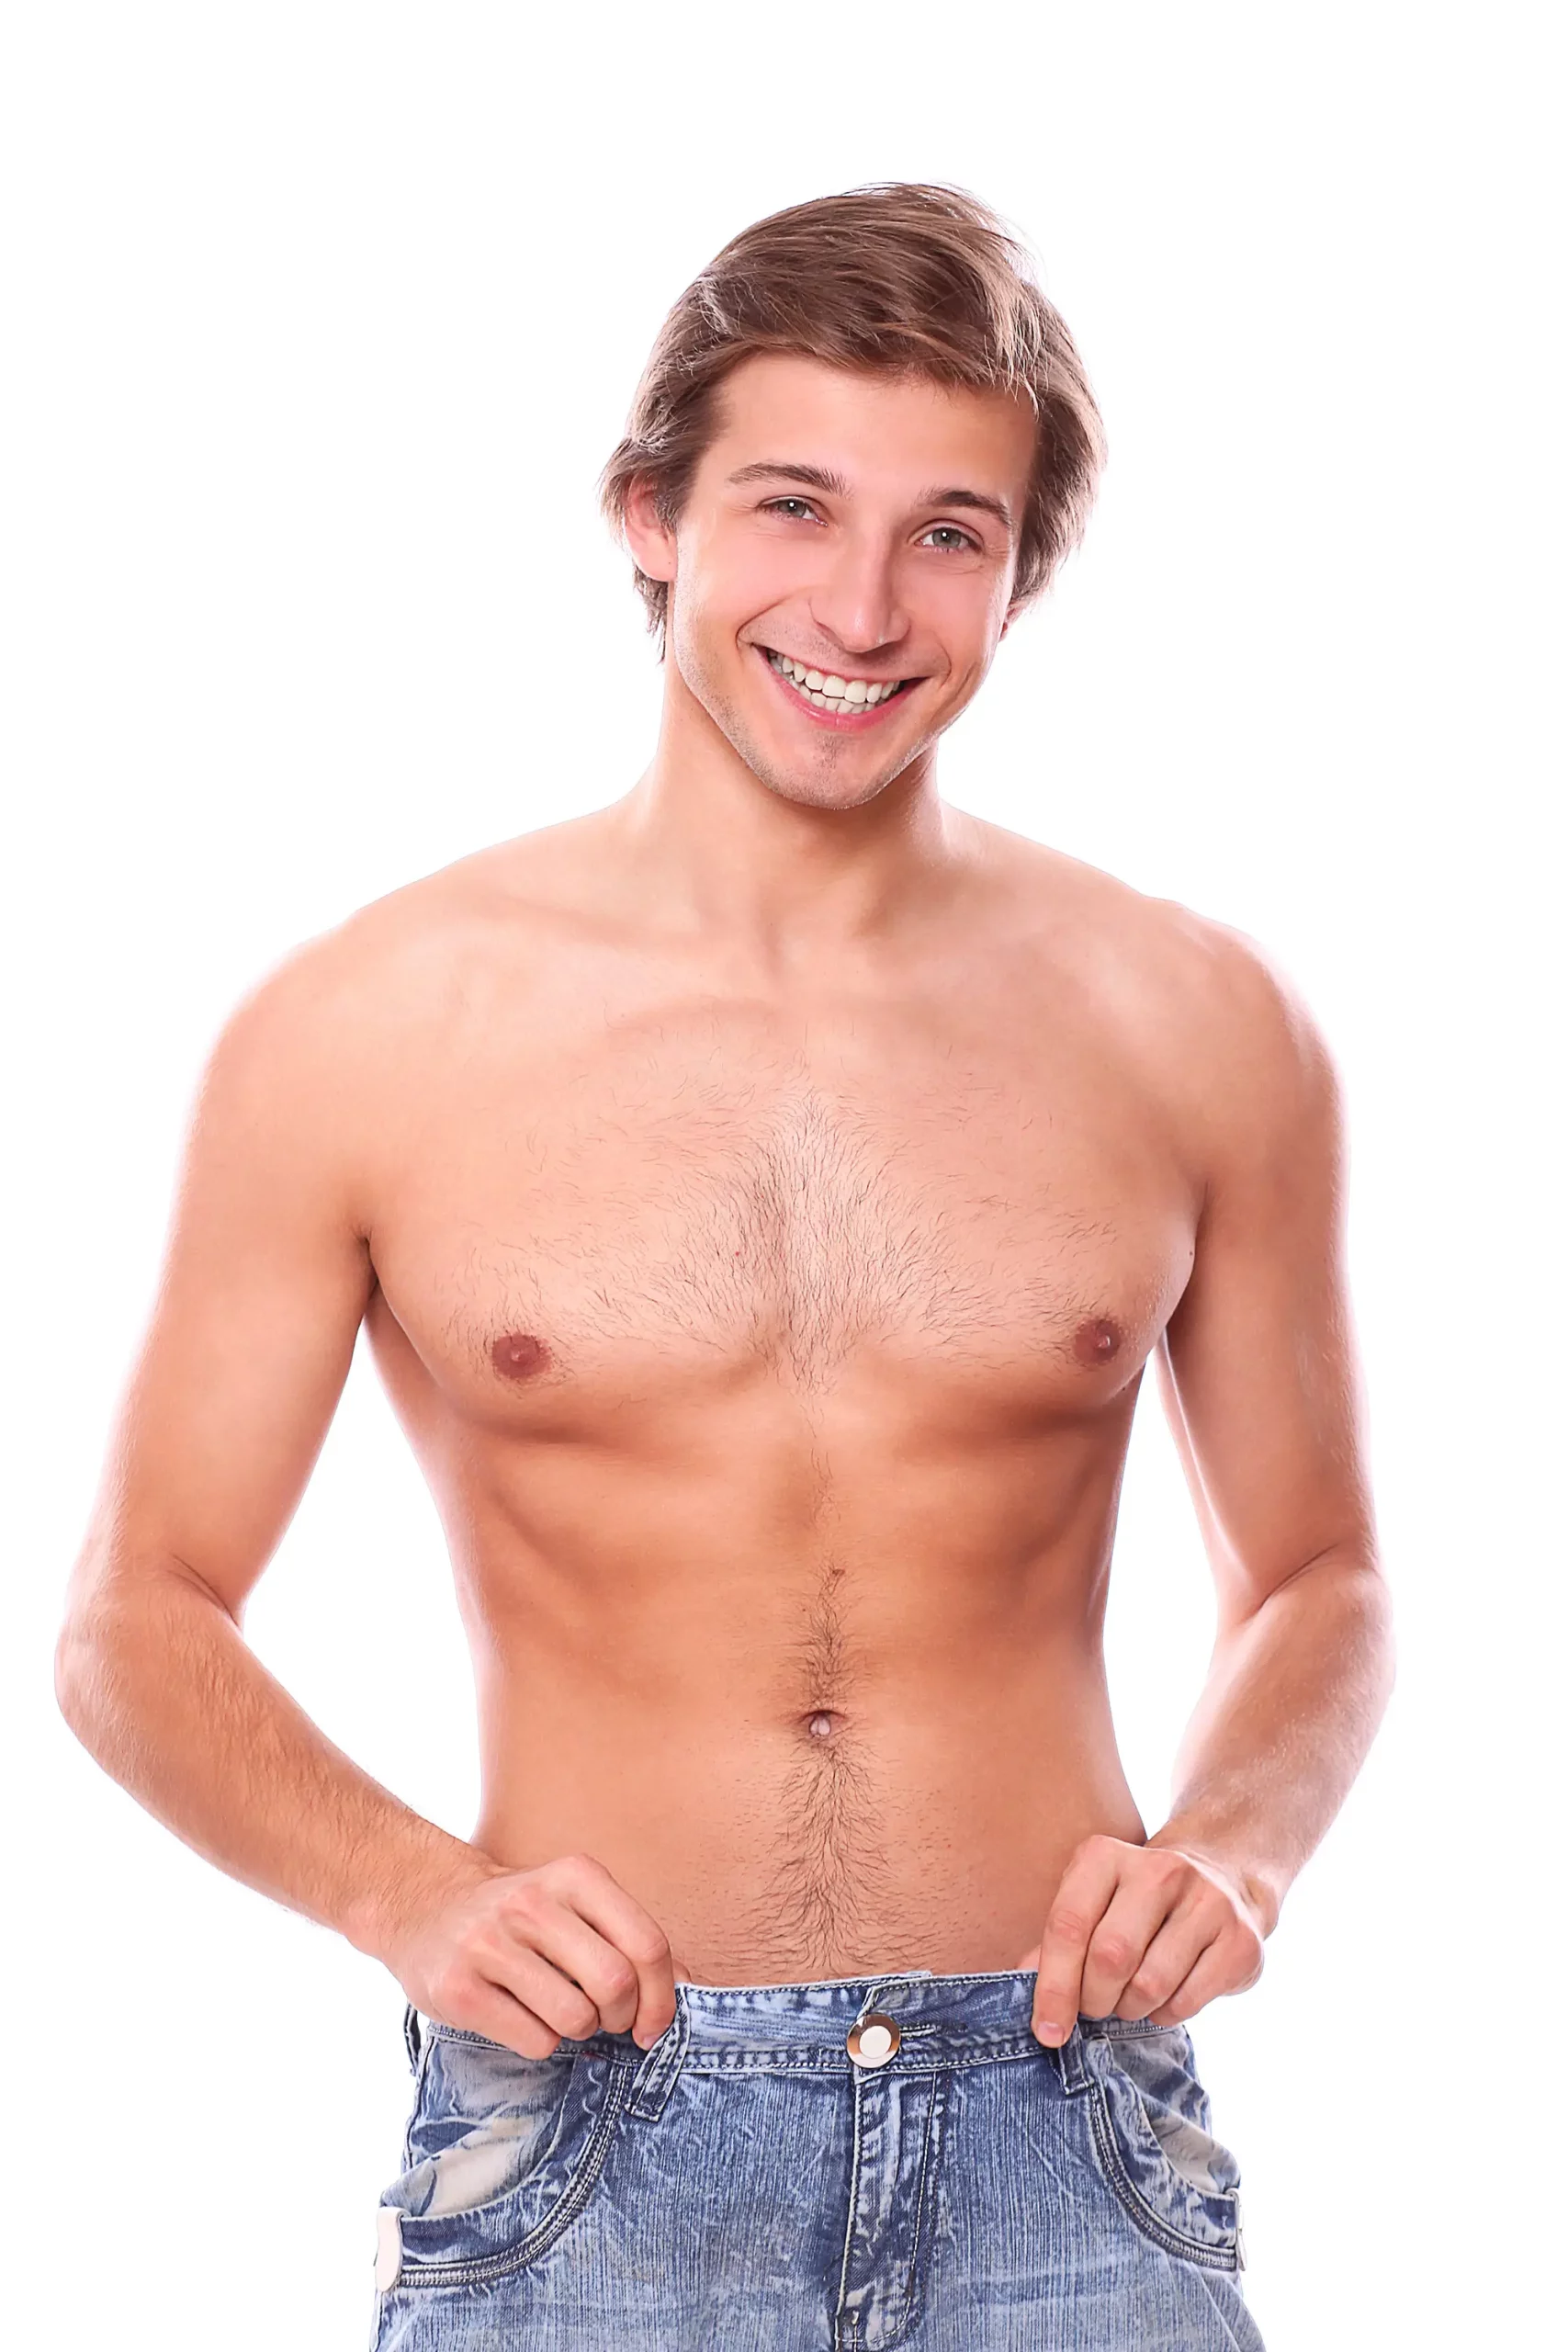 Men laser hair removal in chest